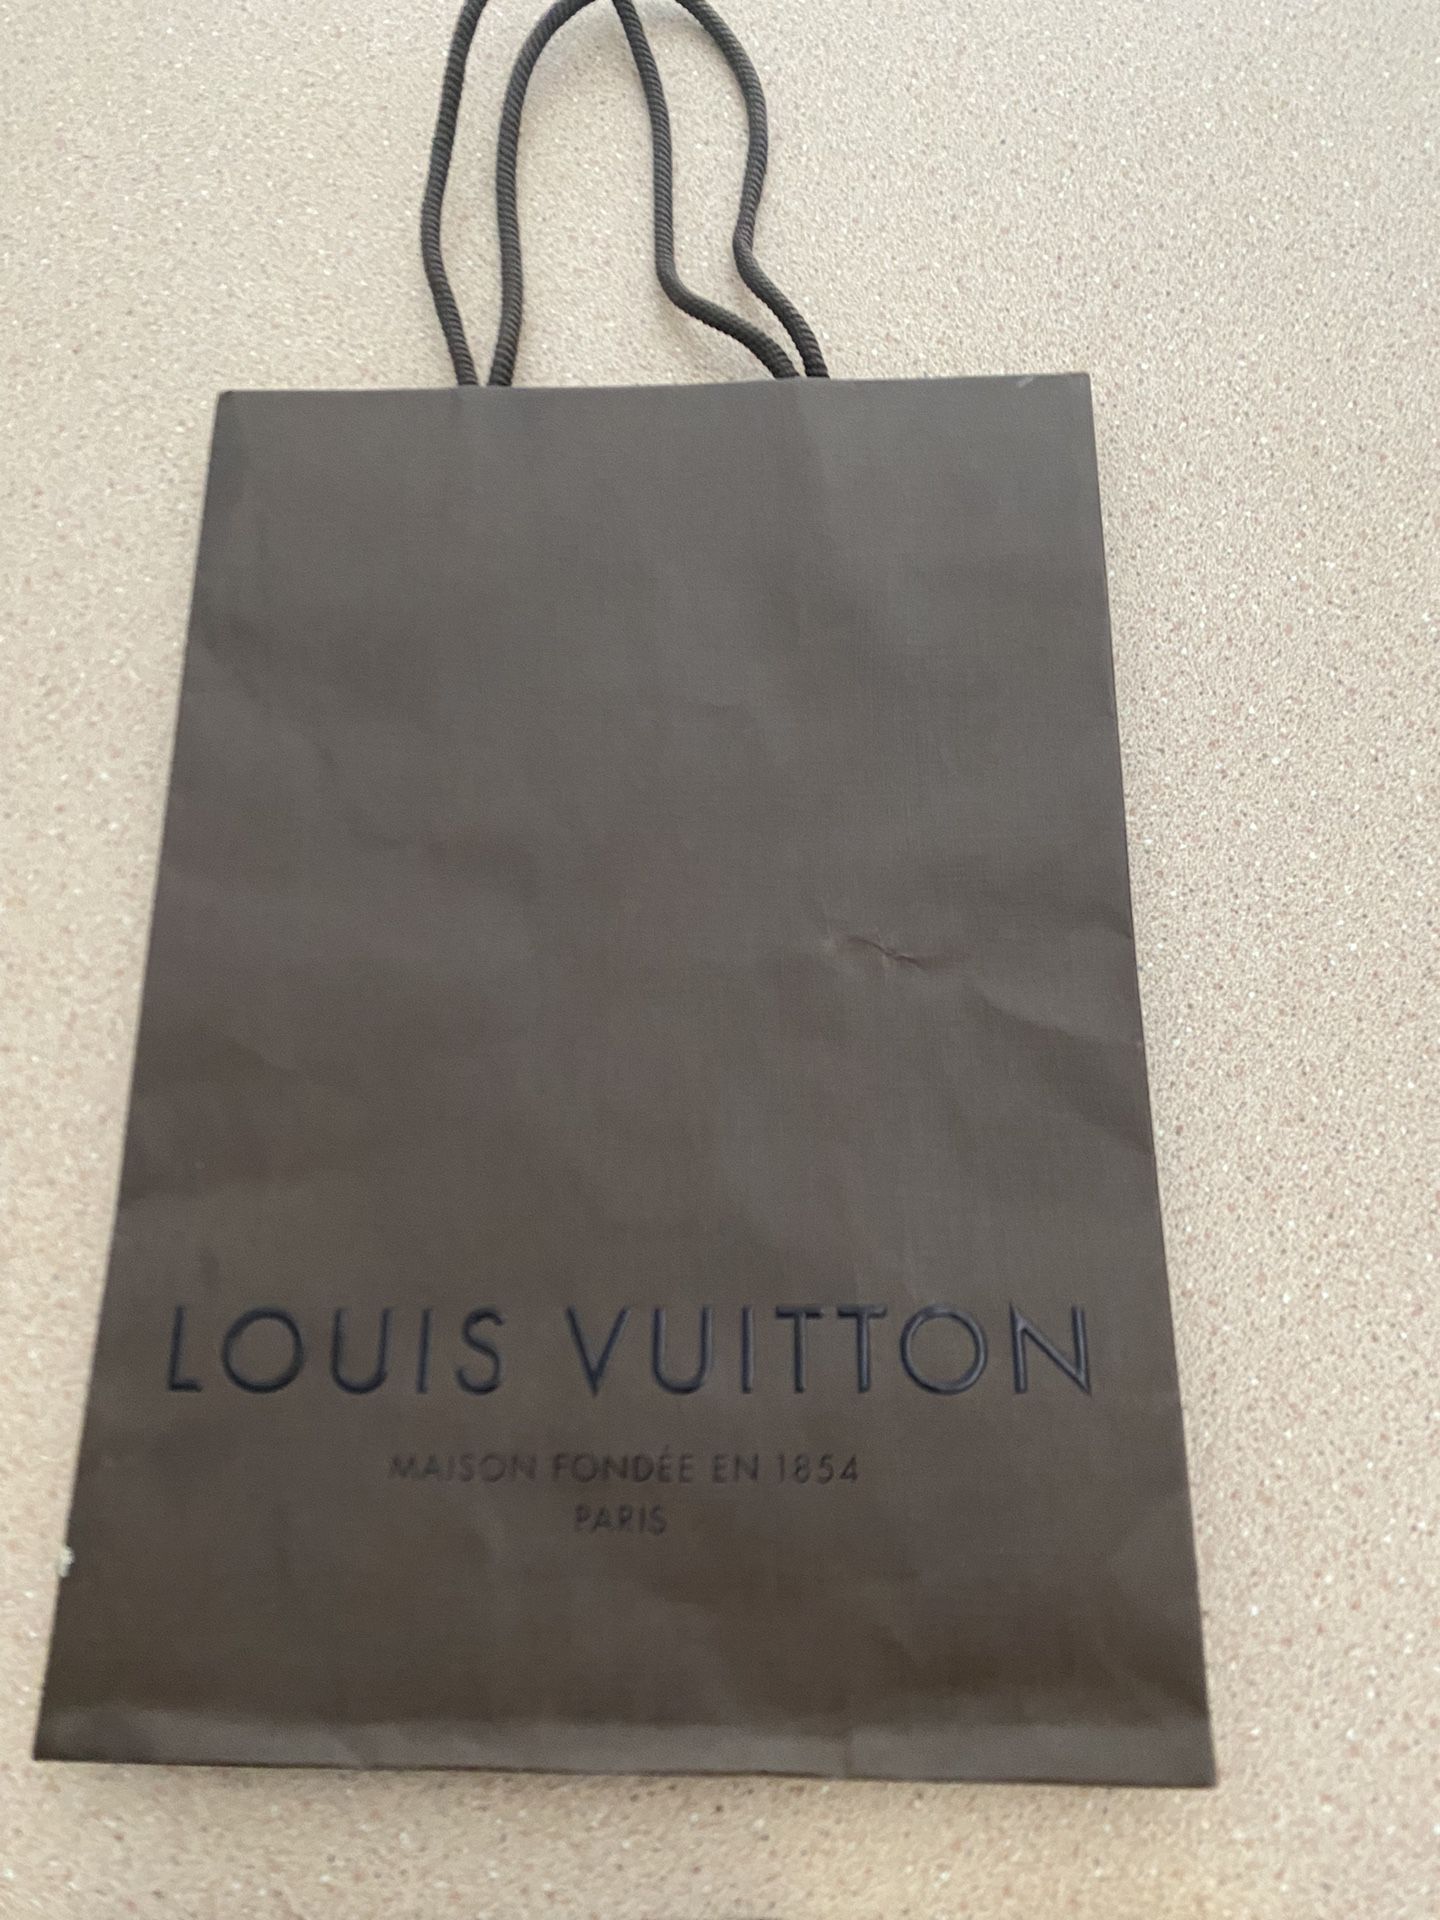 Louis Vuitton Bag Or Box